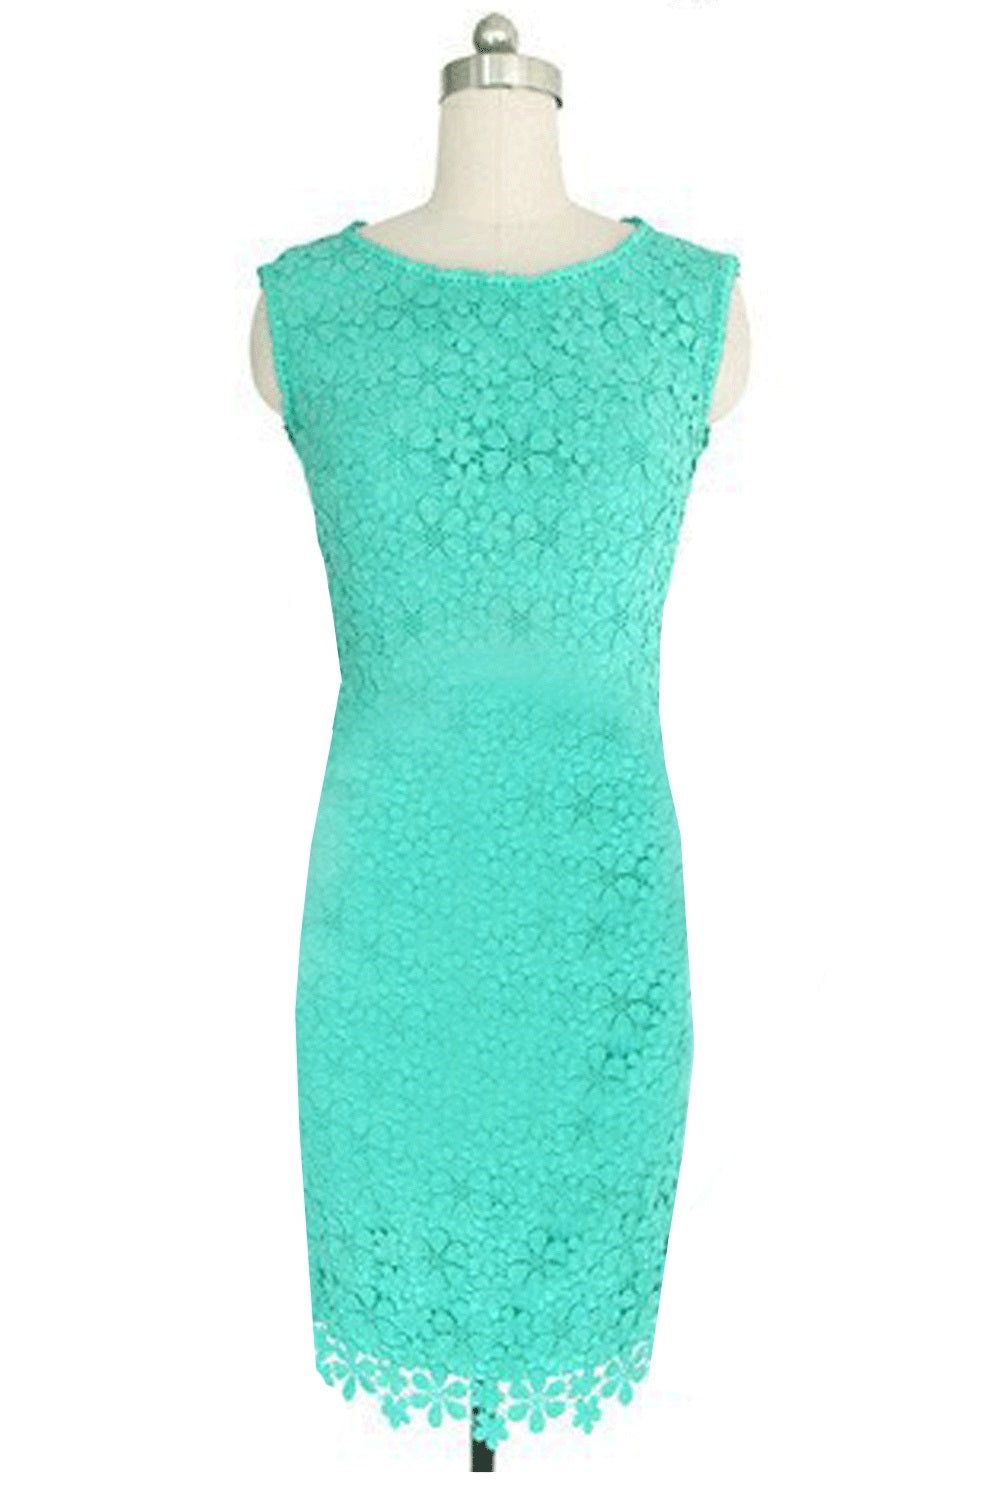 Ketty More  Women's Summer Lace Sleeveless Pencil Style Dress-KMWD216